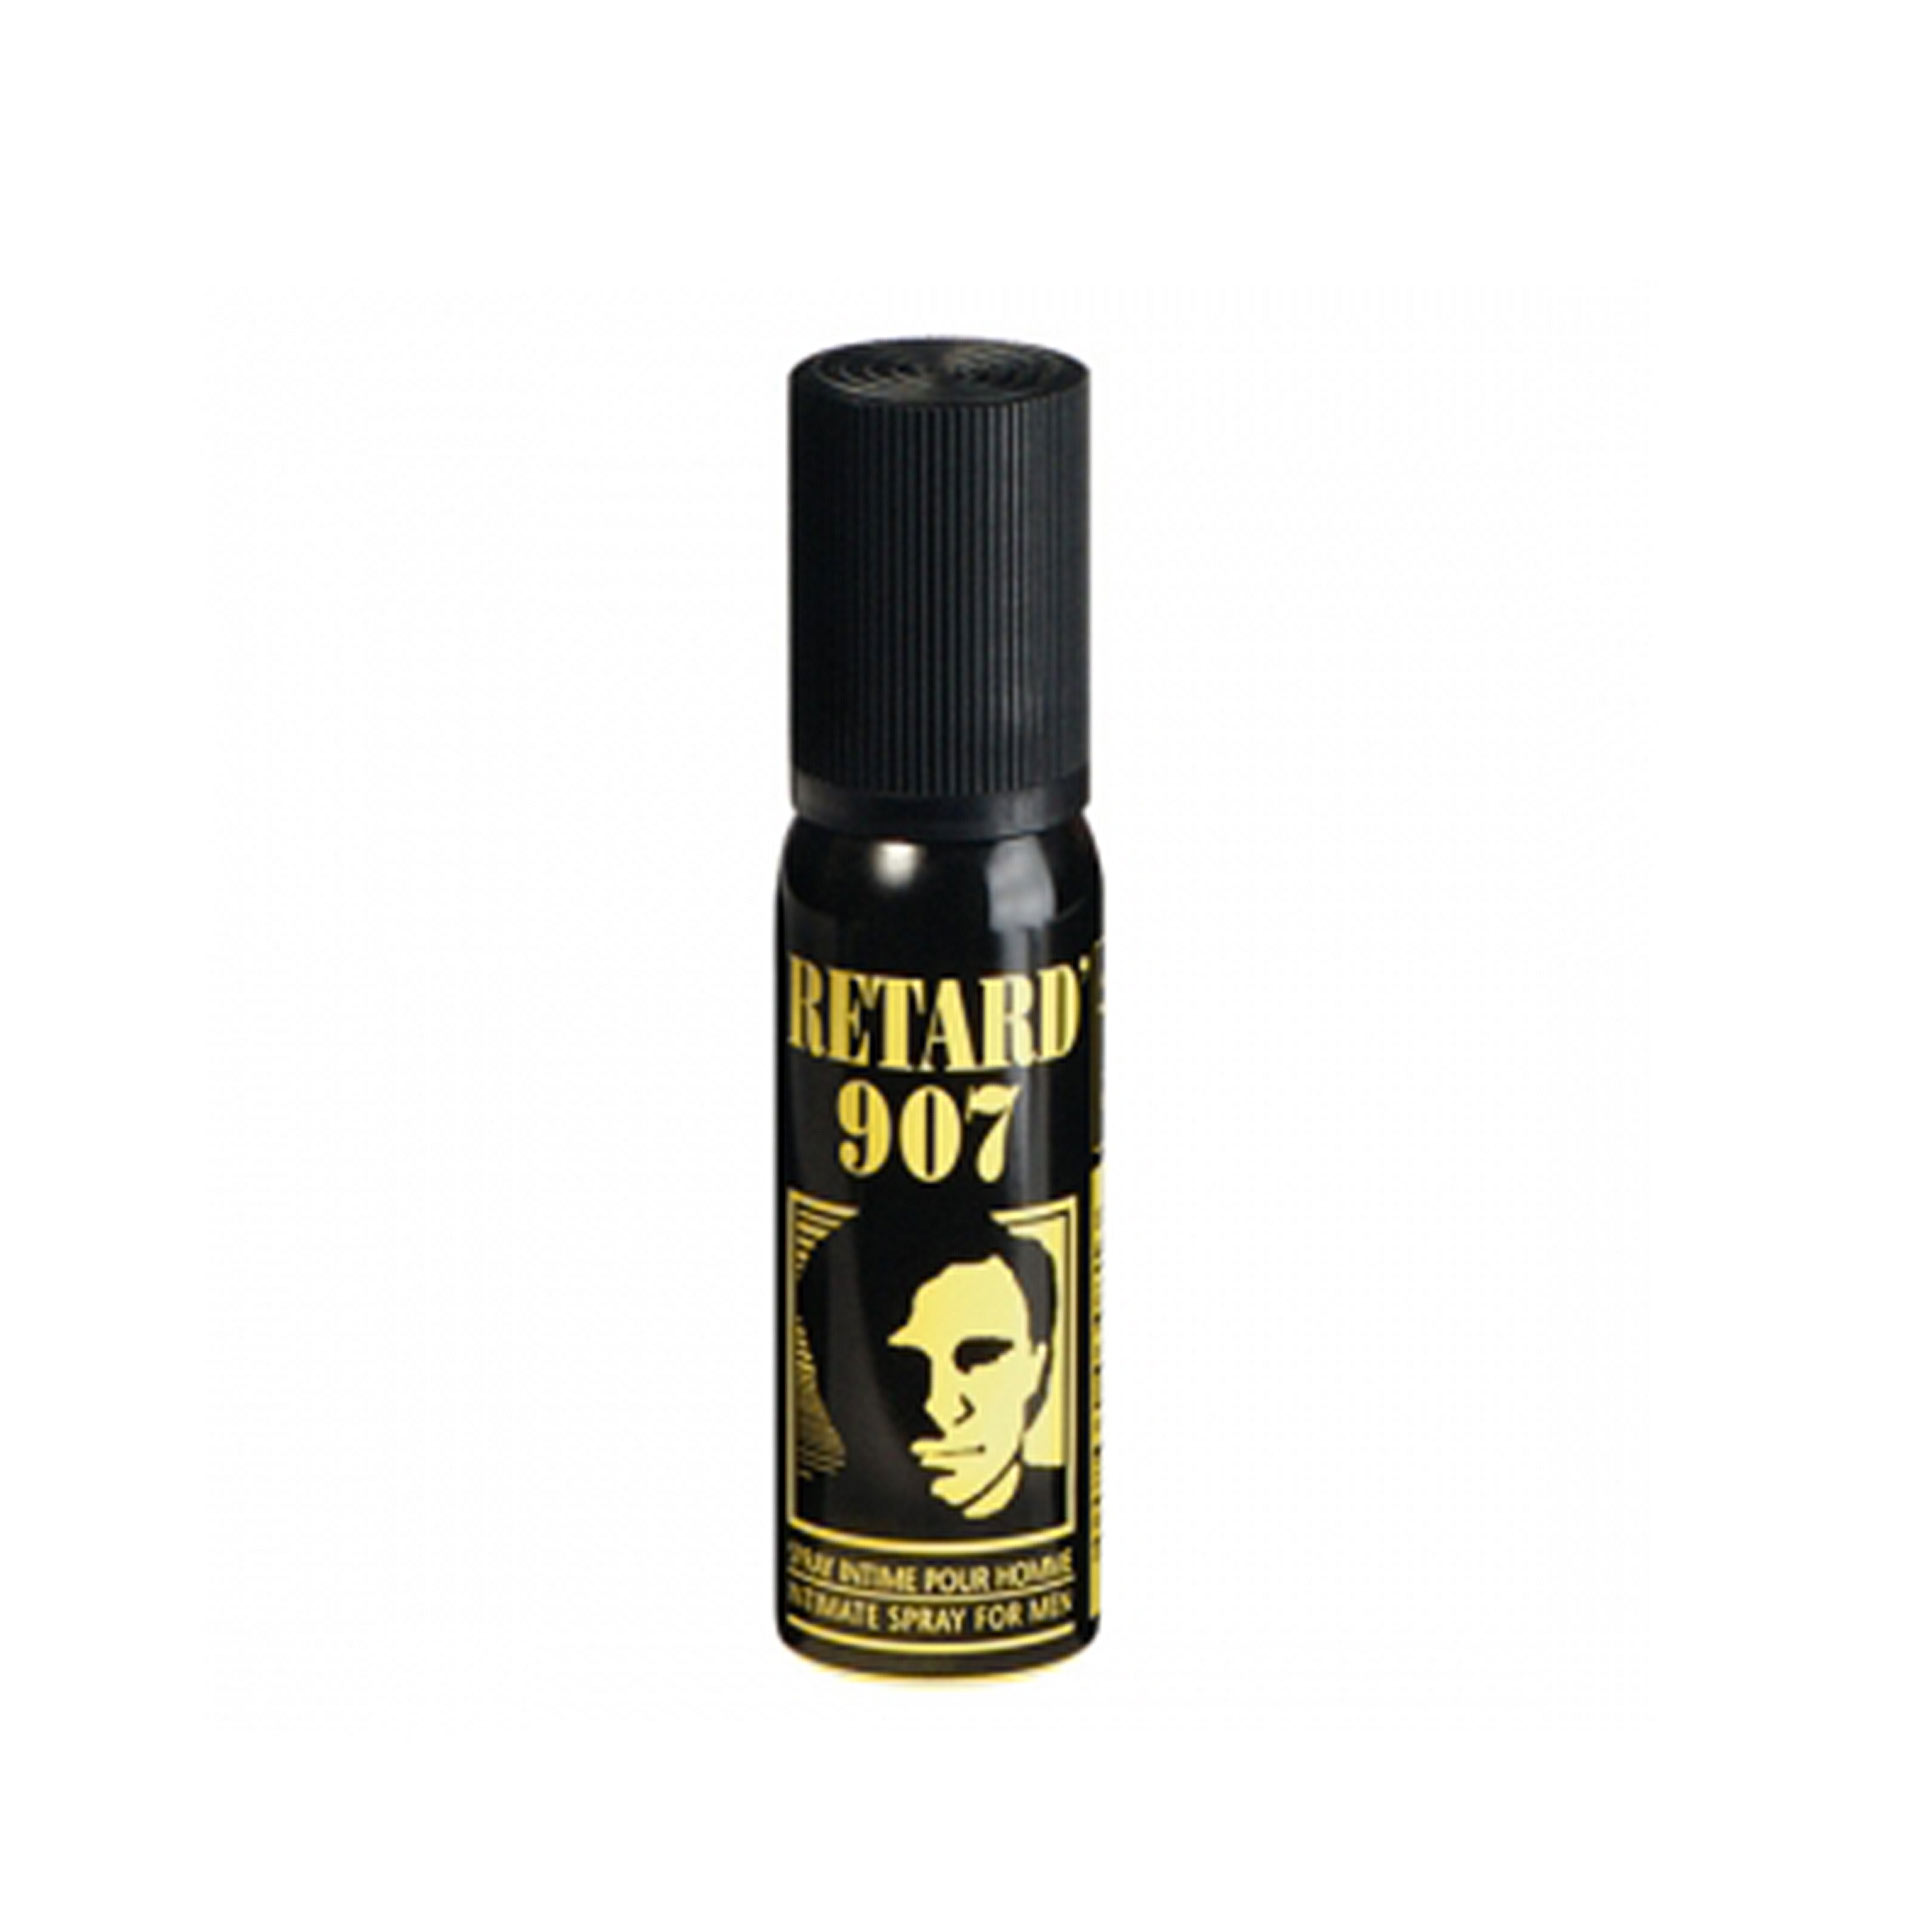 Spray Retardant Men 15 ml de Dorcel